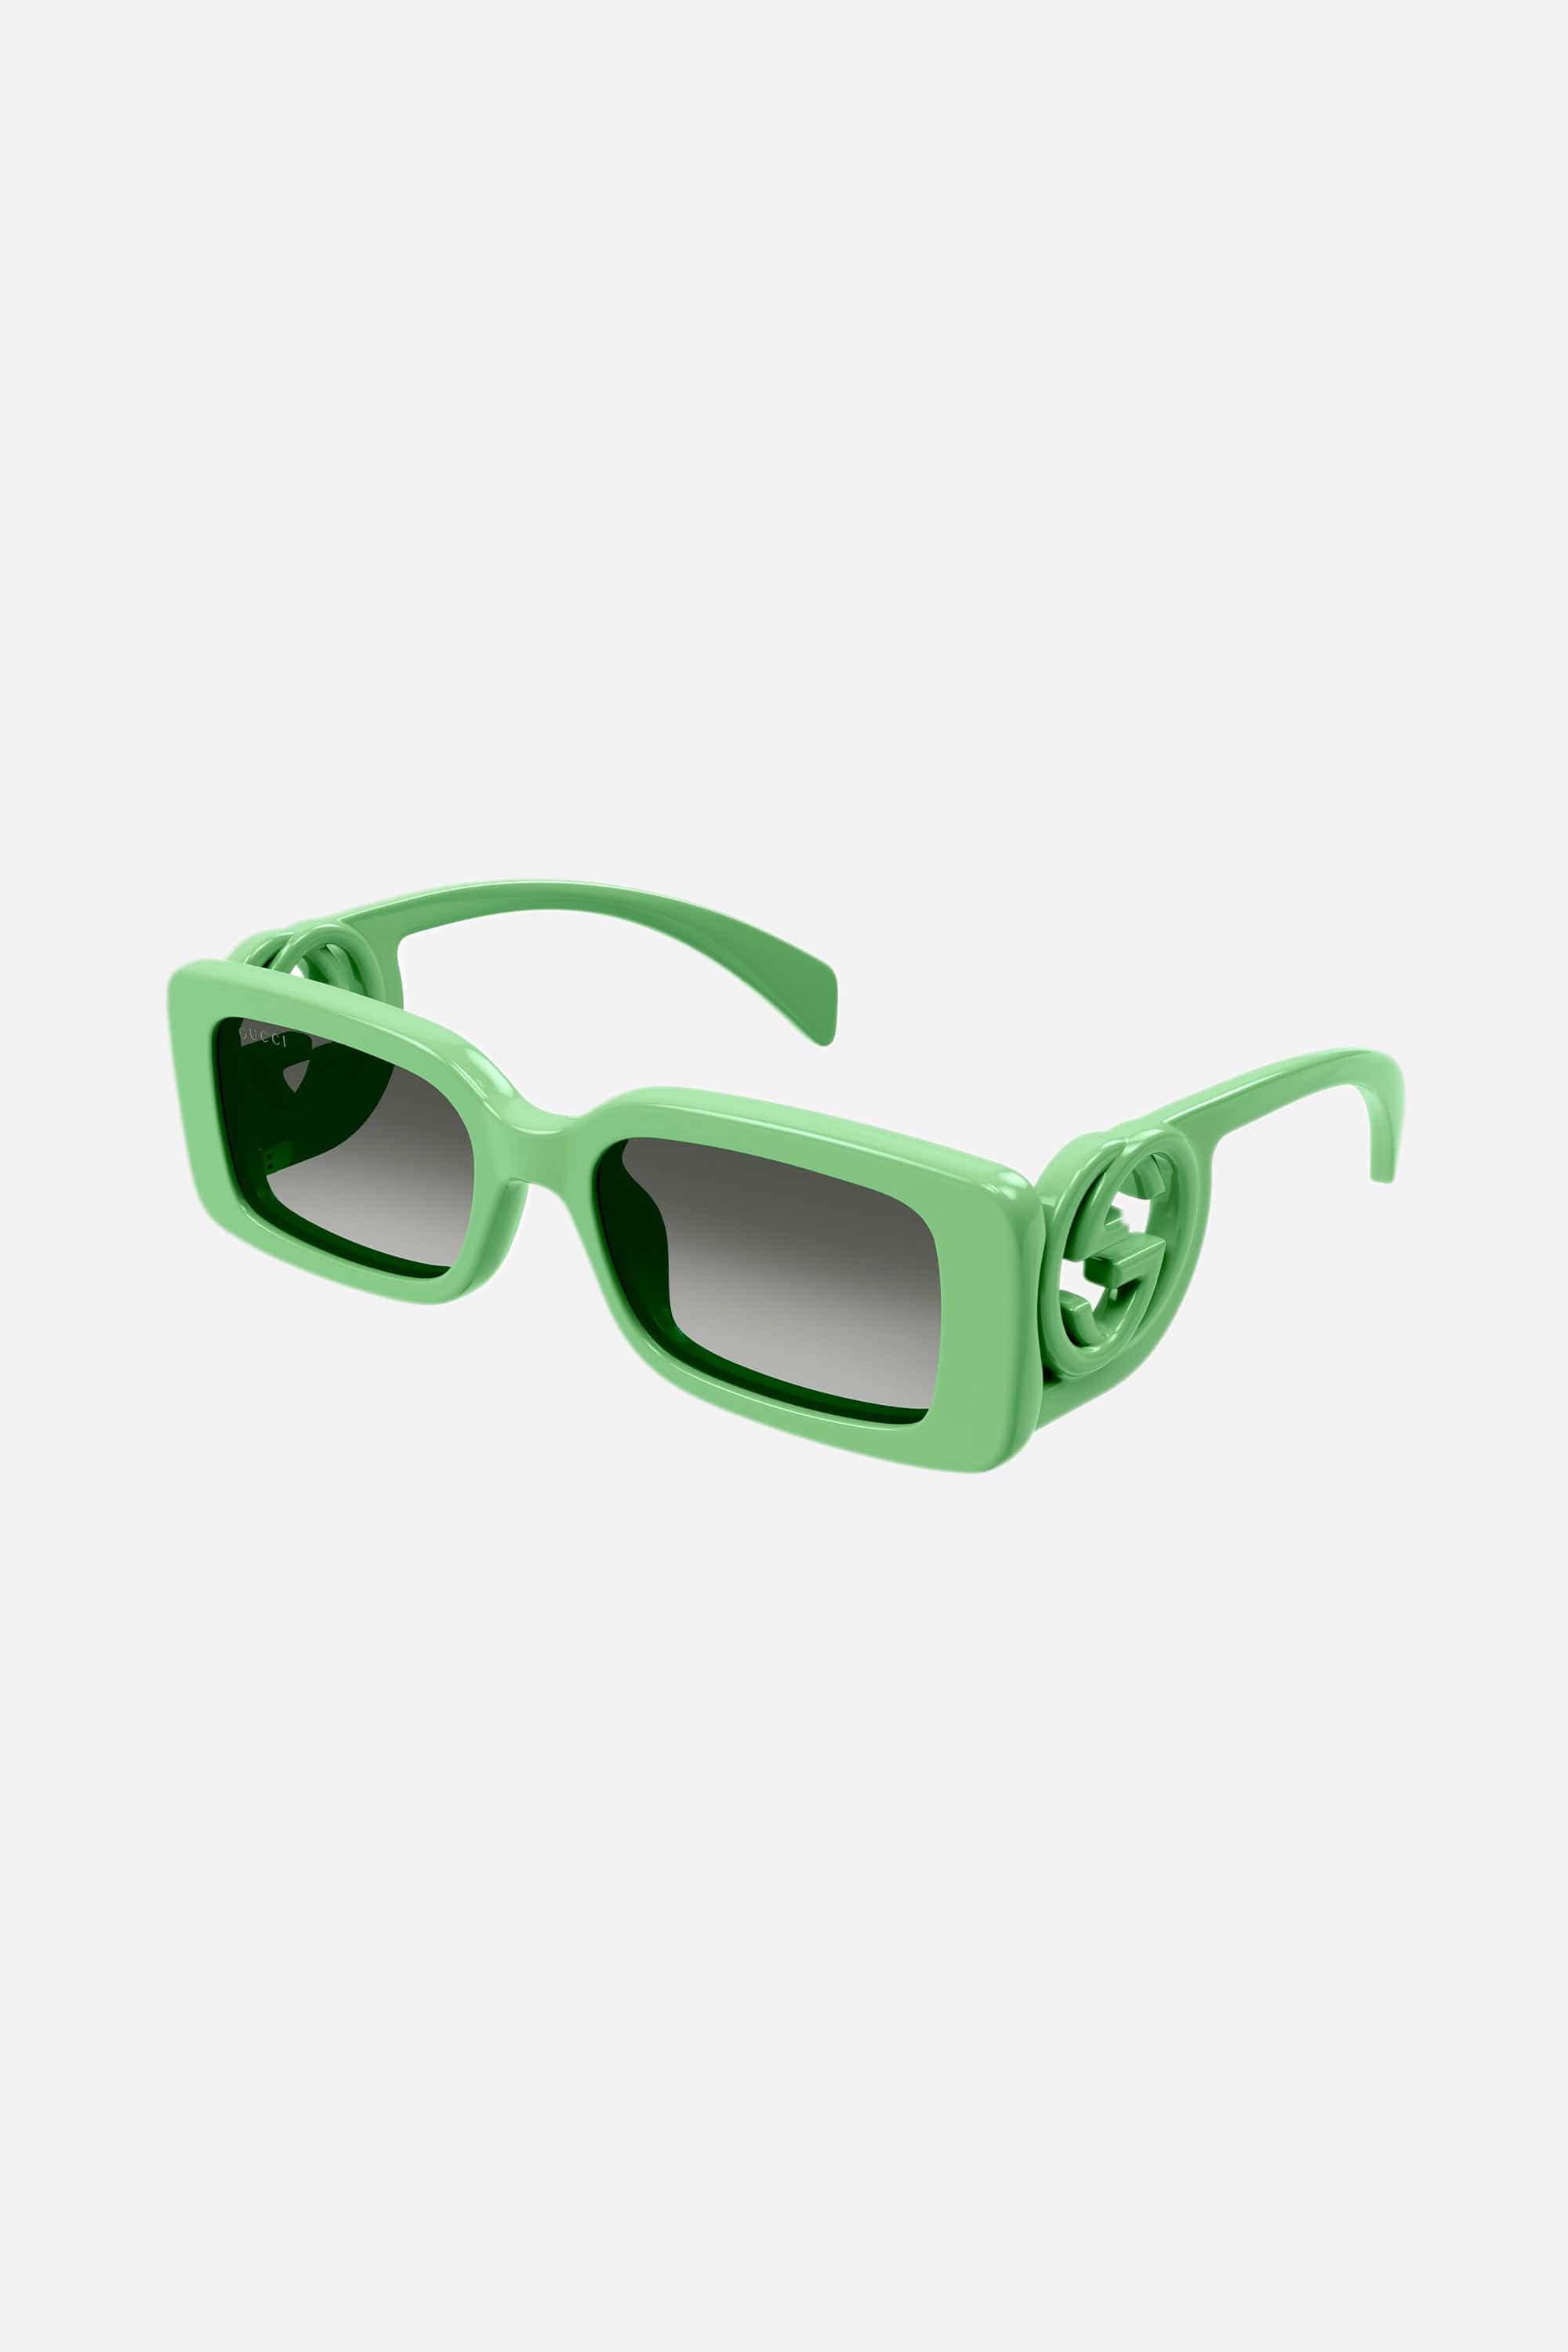 Gucci green bold rectangular sunglasses - Eyewear Club